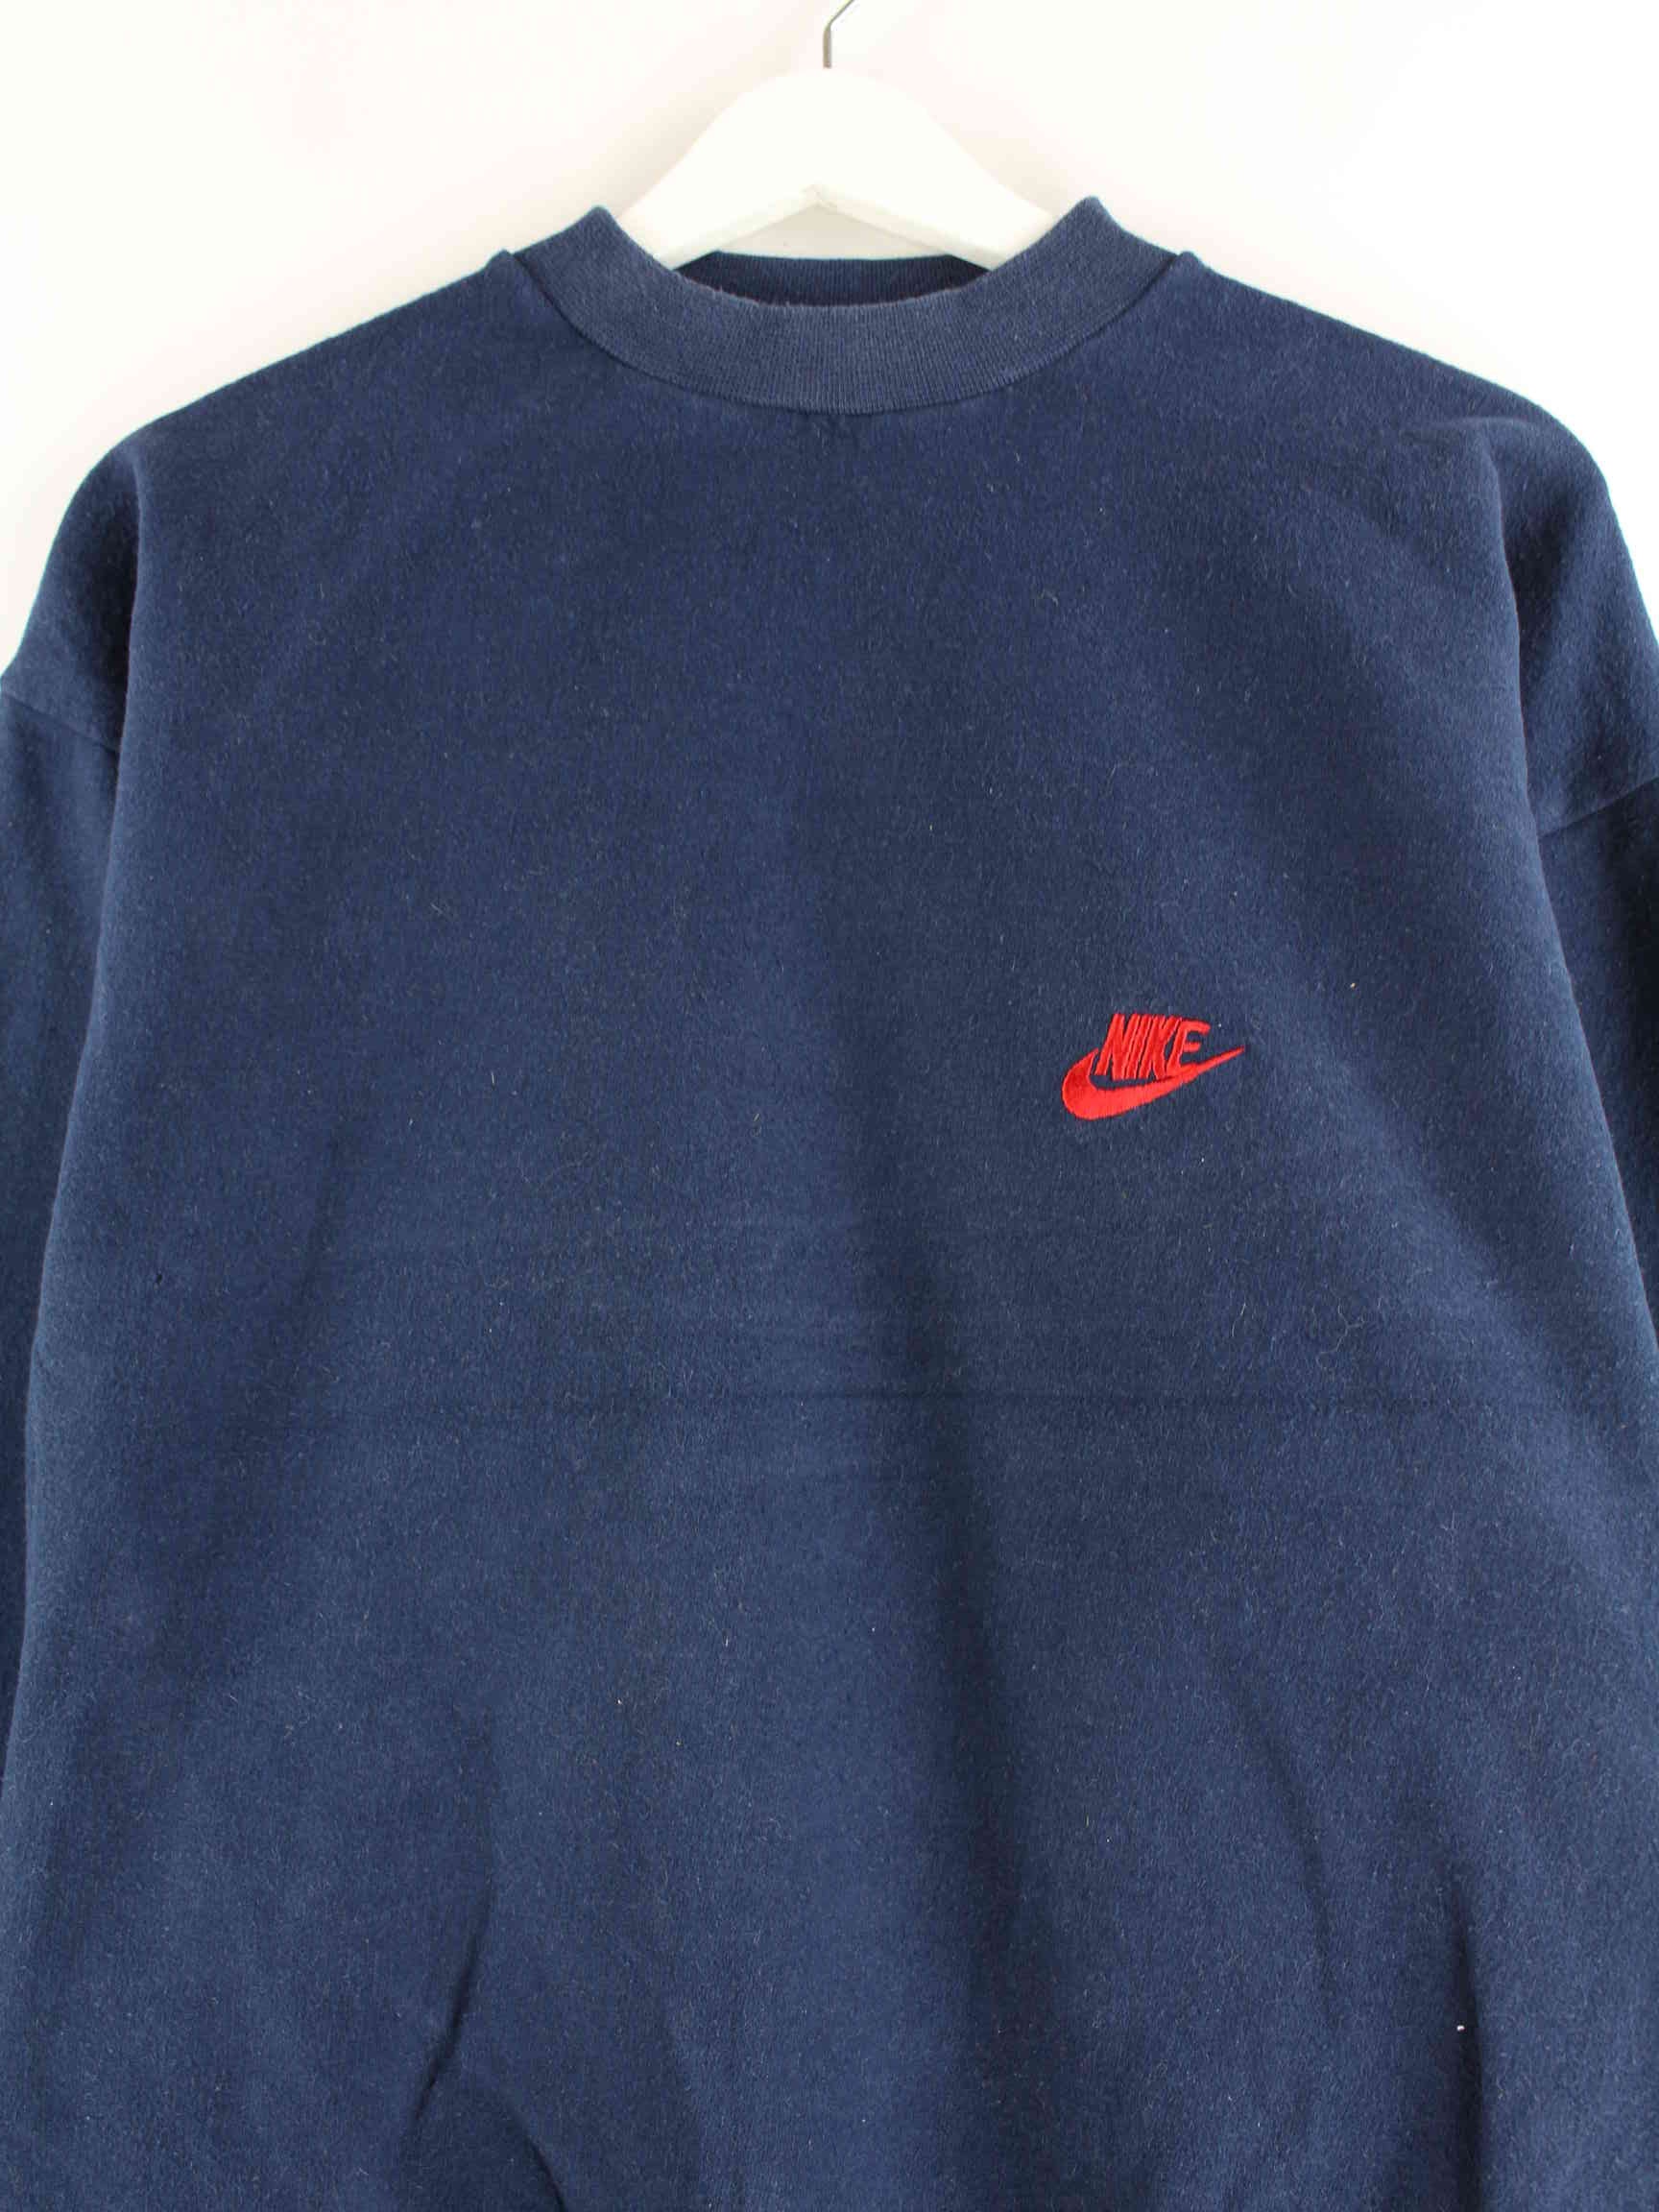 Nike 90s Vintage Swoosh Sweater Blau S (detail image 1)